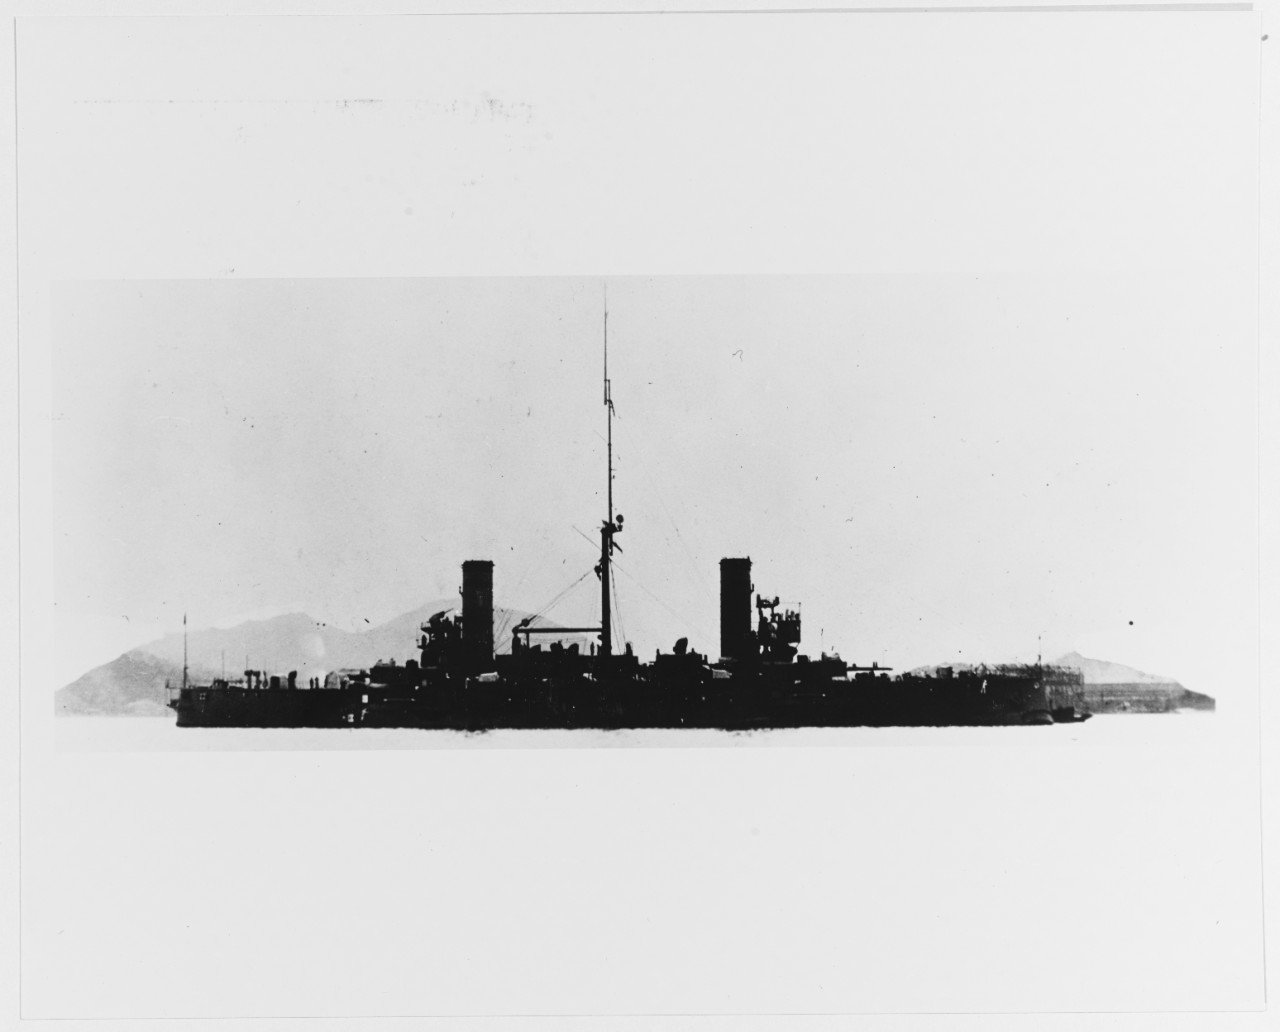 NISSHIN (Japanese armored cruiser, 1903)